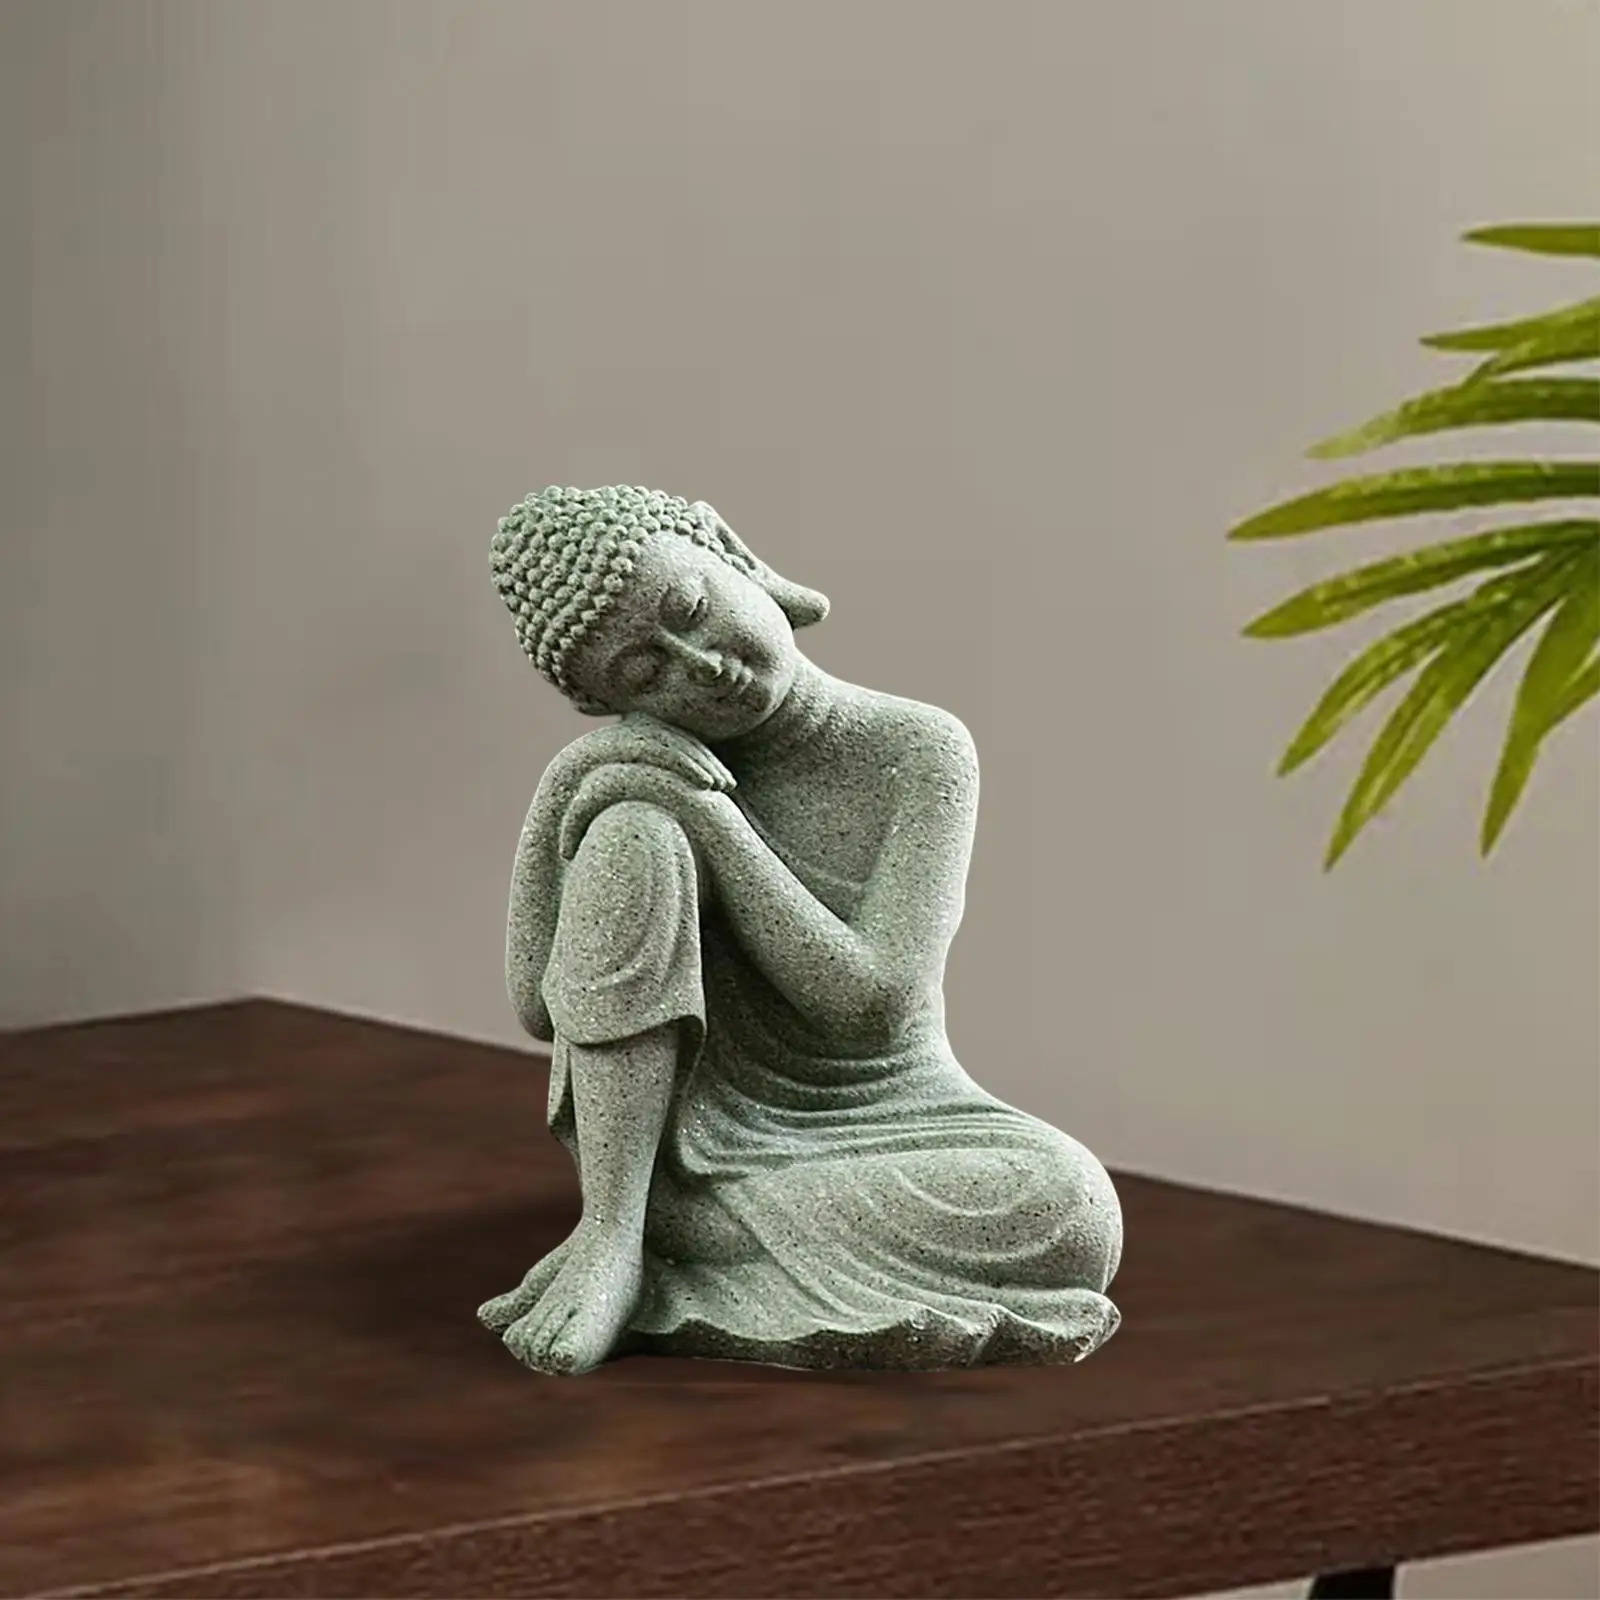 Small Buddha Statue Ornament Yoga Figurines rustic zen Oriental Decorative for Meditating Desktop Office Indoor Desk